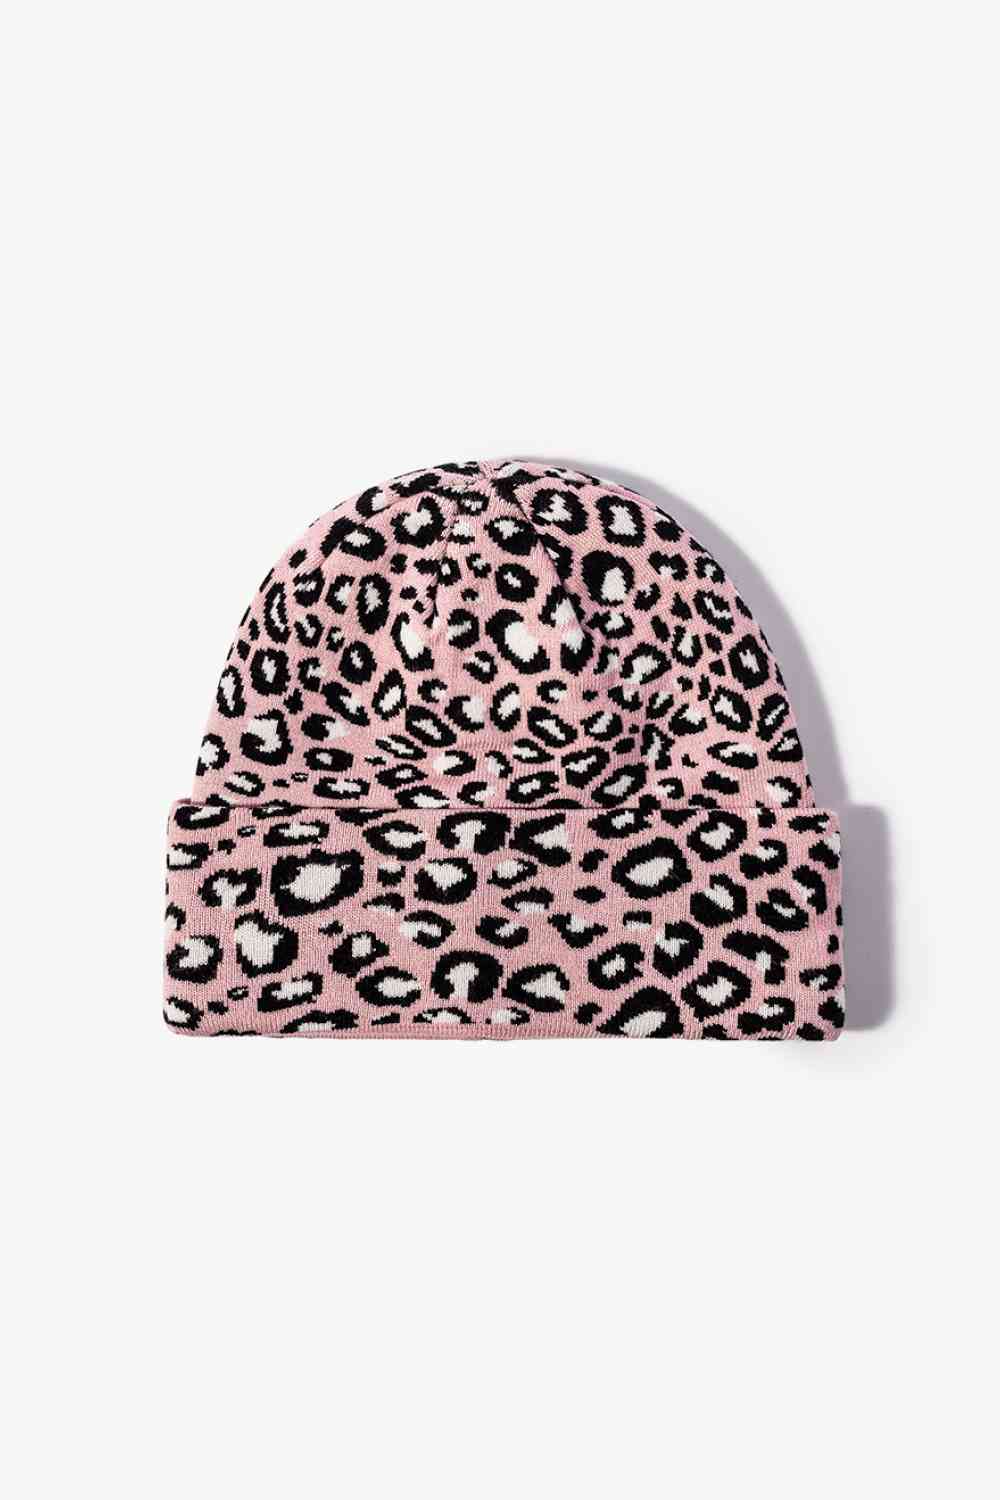 Leopard Pattern Cuffed Beanie Pink One Size